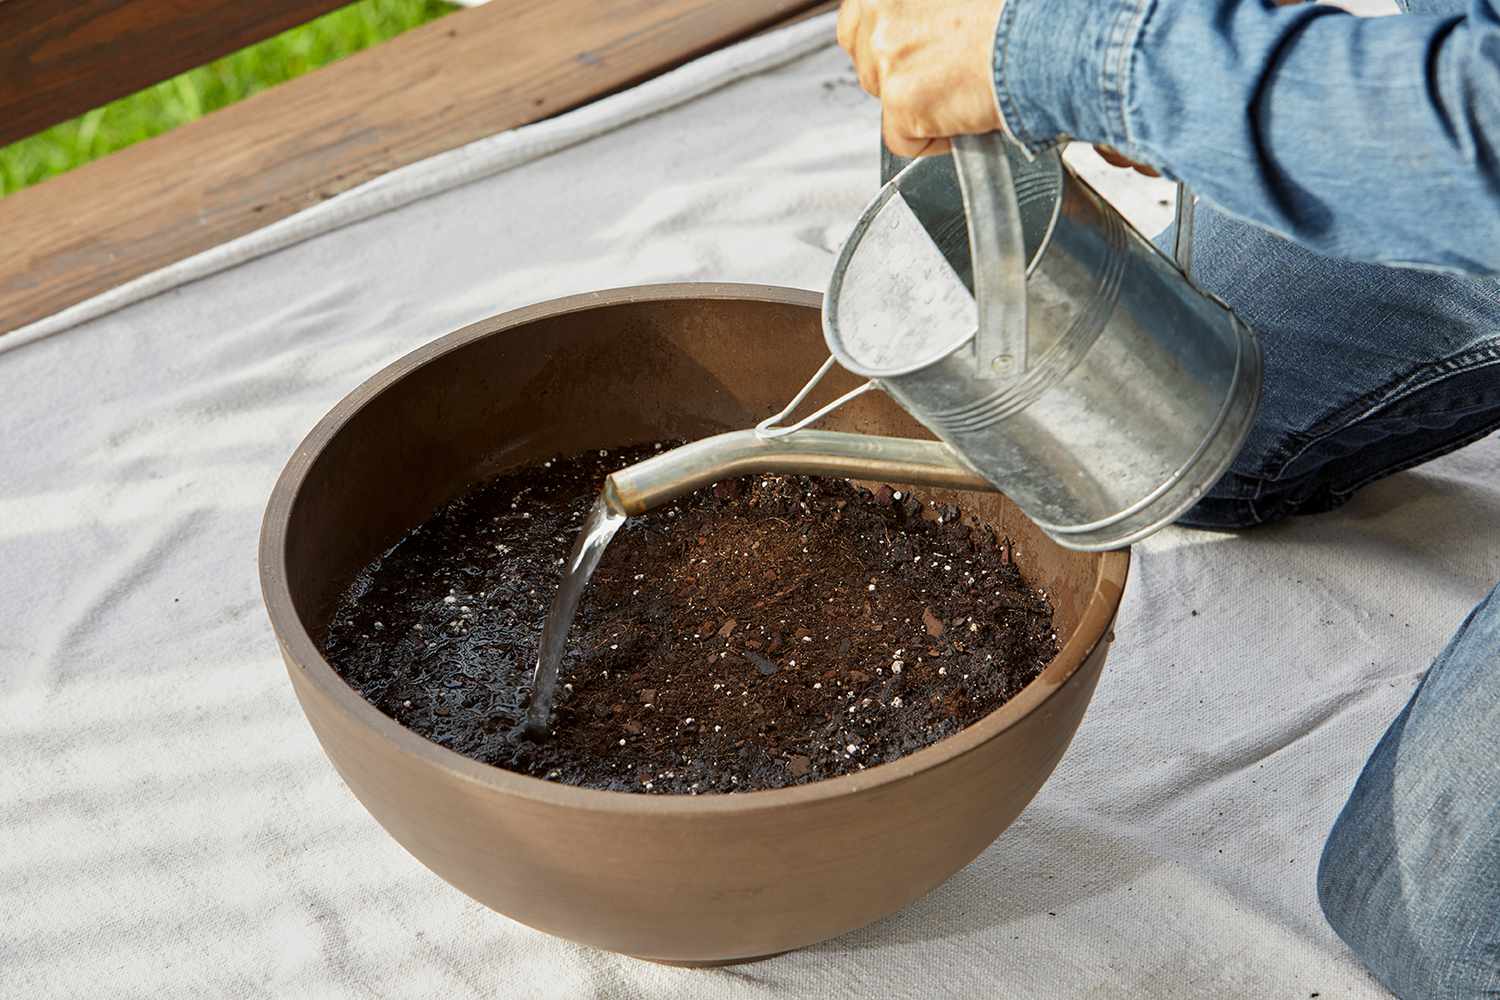 watering soil inside planter bowl